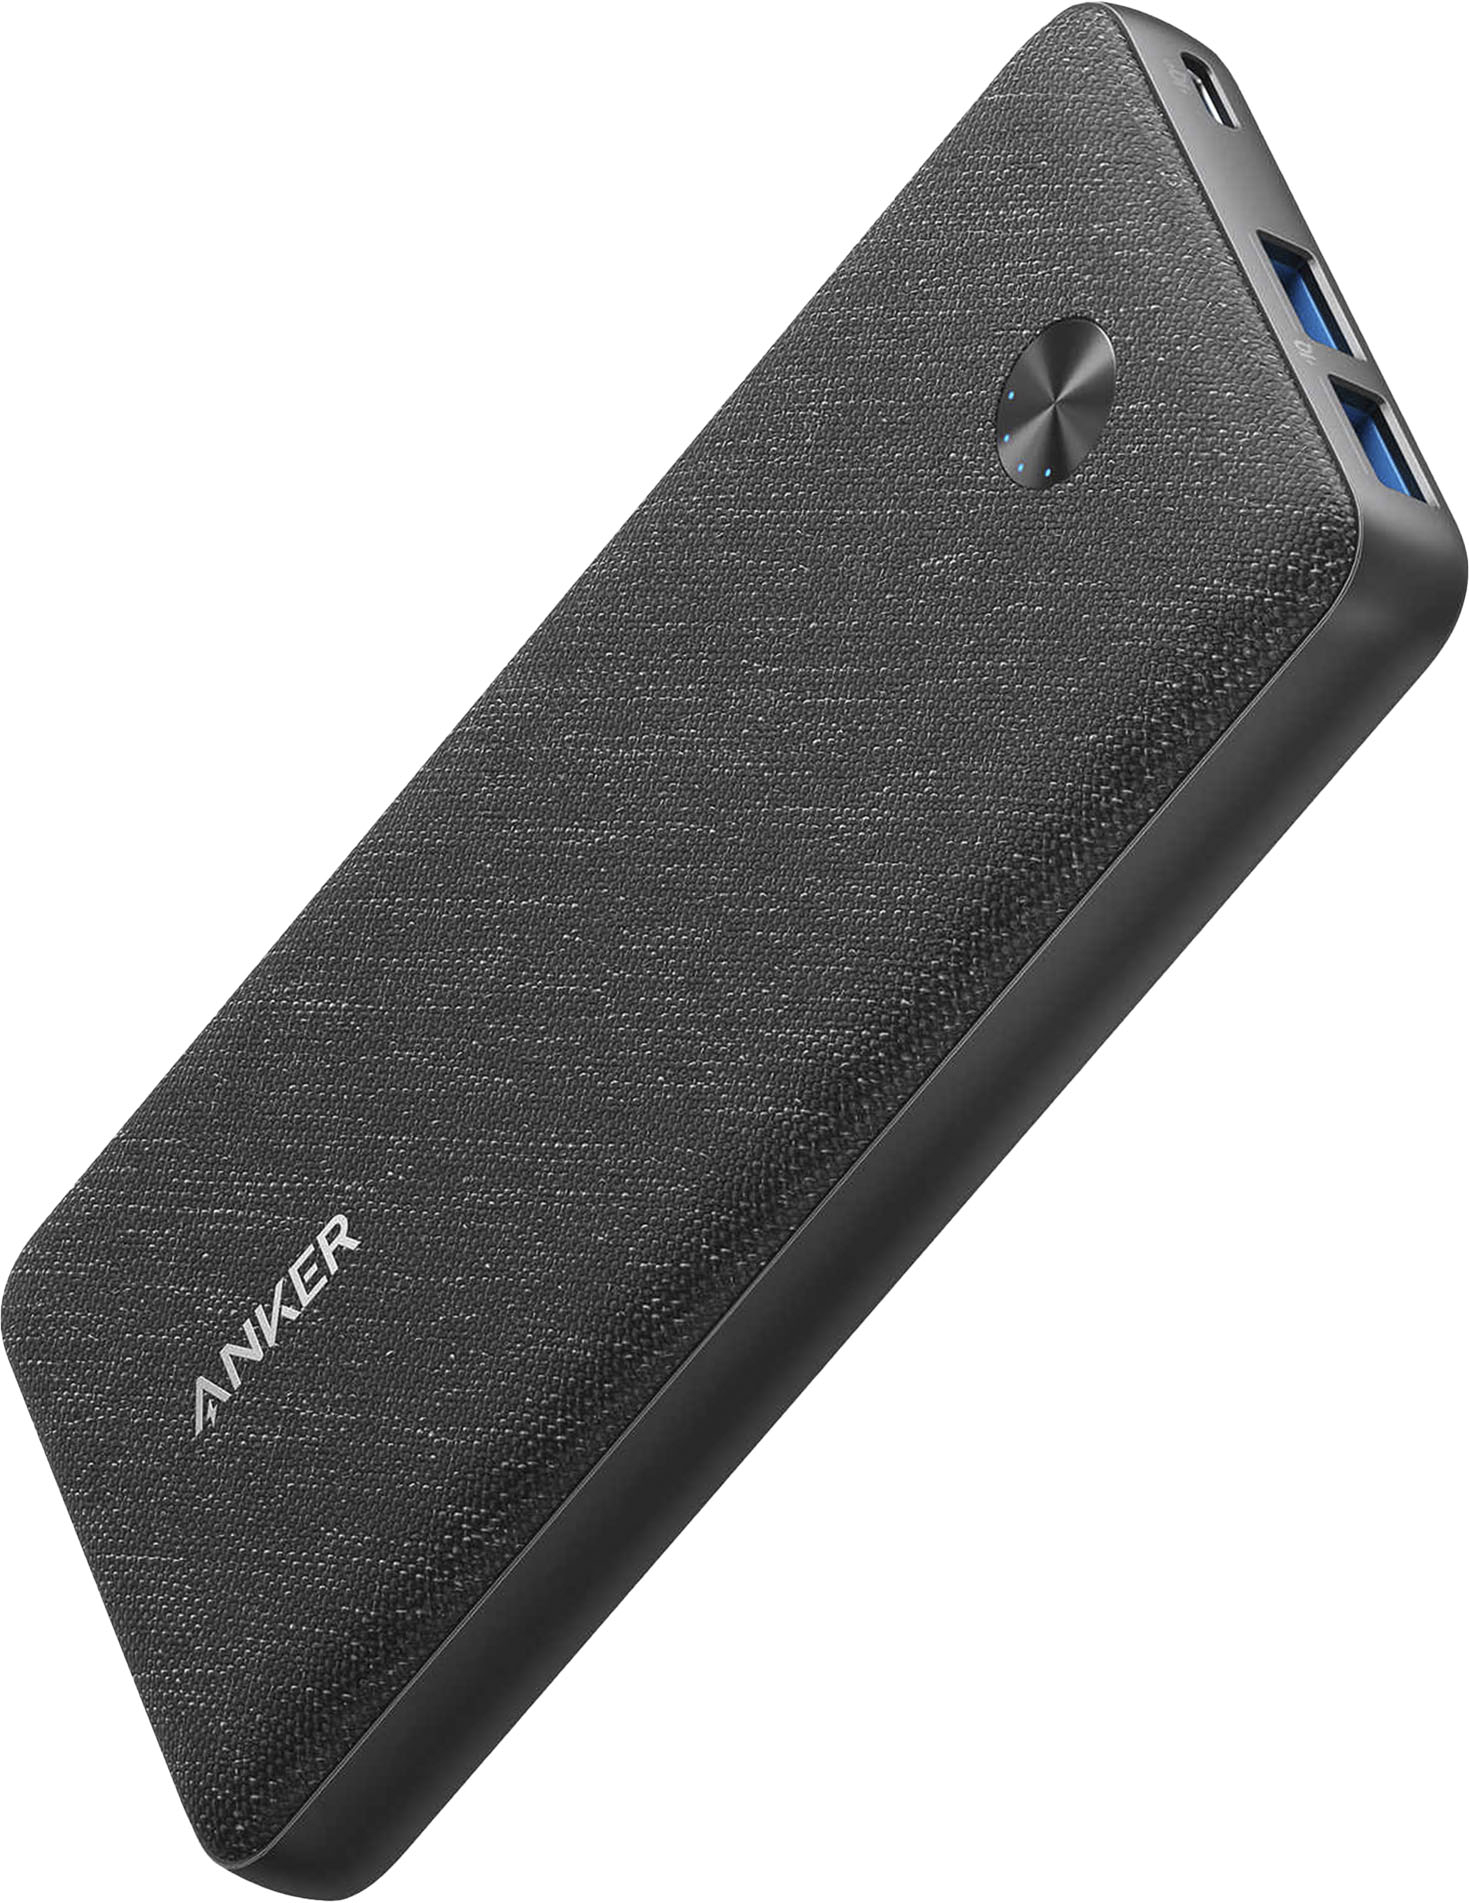 Anker PowerCore III Sense 20K mAh 20W USB-C Battery Charger Black A1365H11-1 - Best Buy